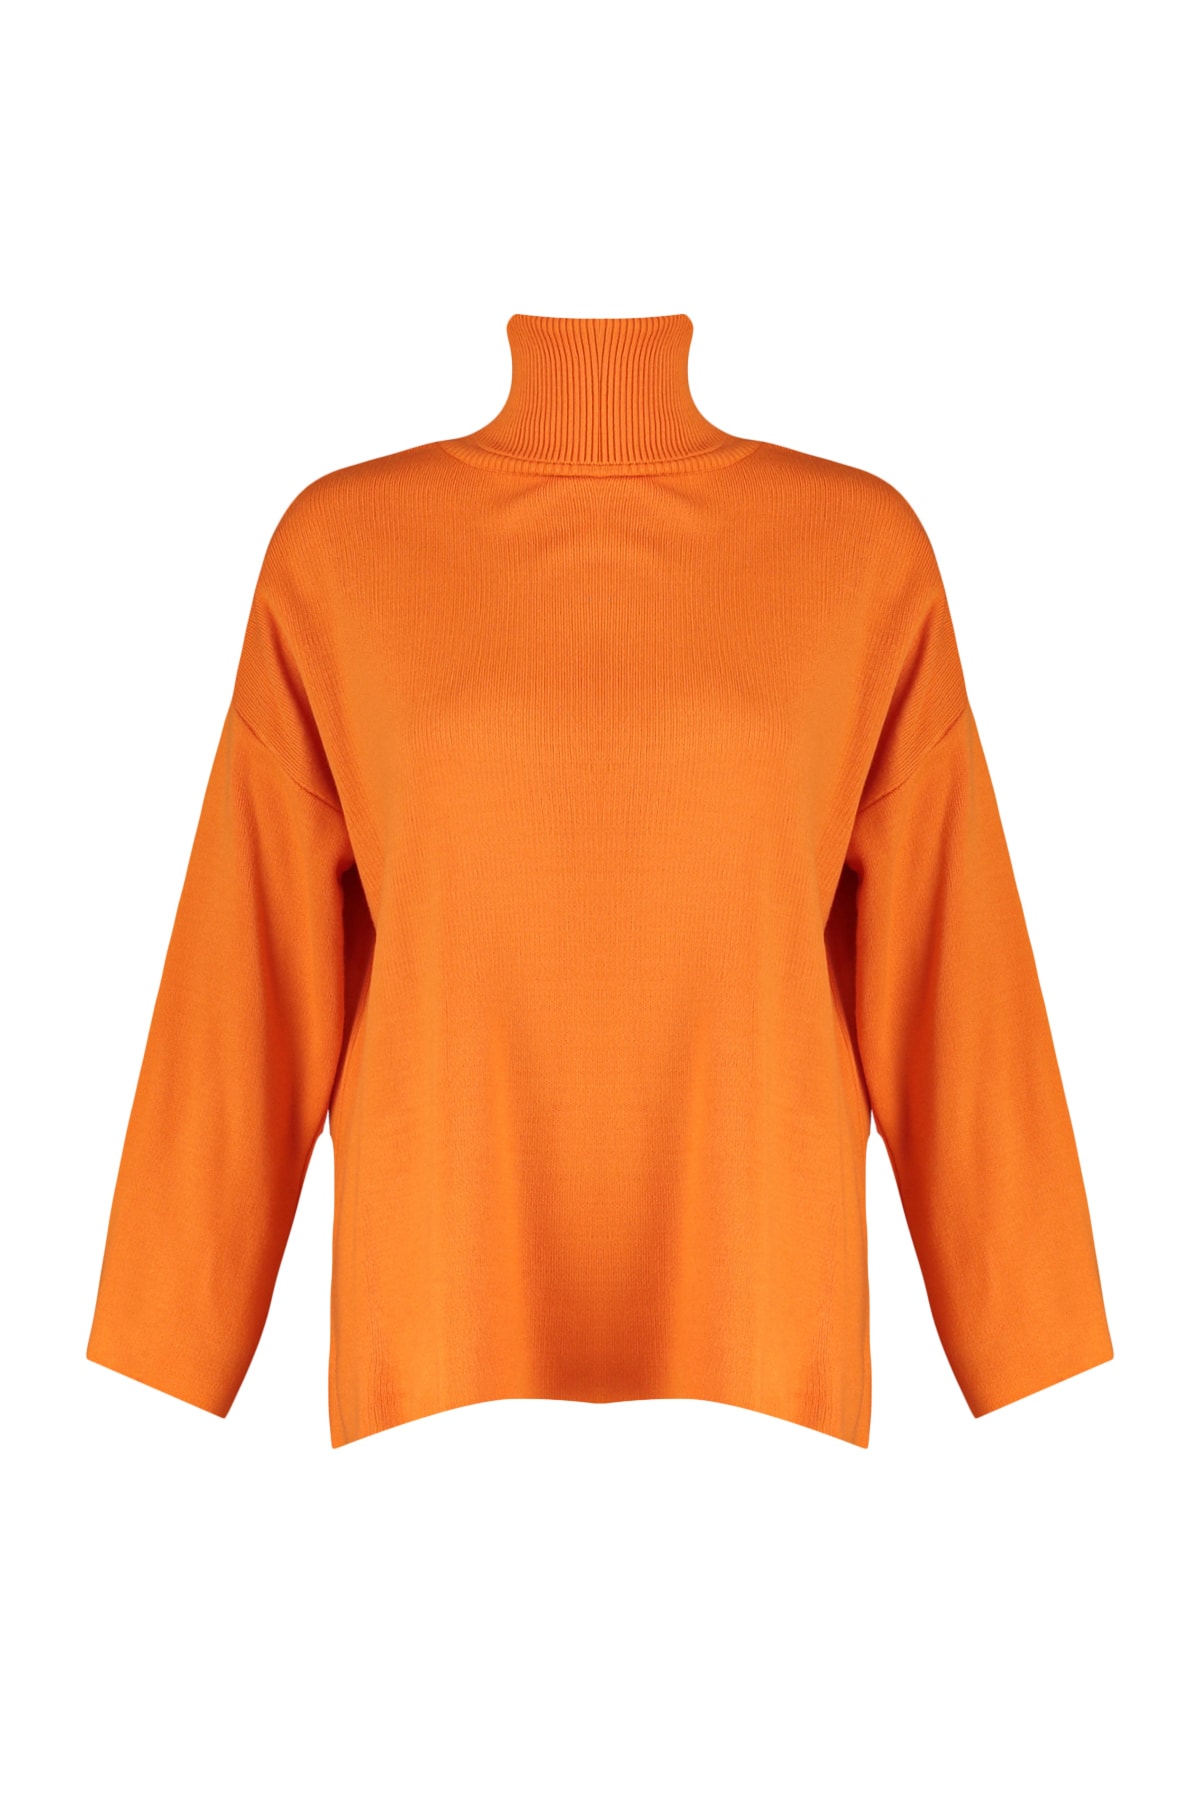 Trendyol Collection Pullover Orange Oversized Fast ausverkauft AR9447